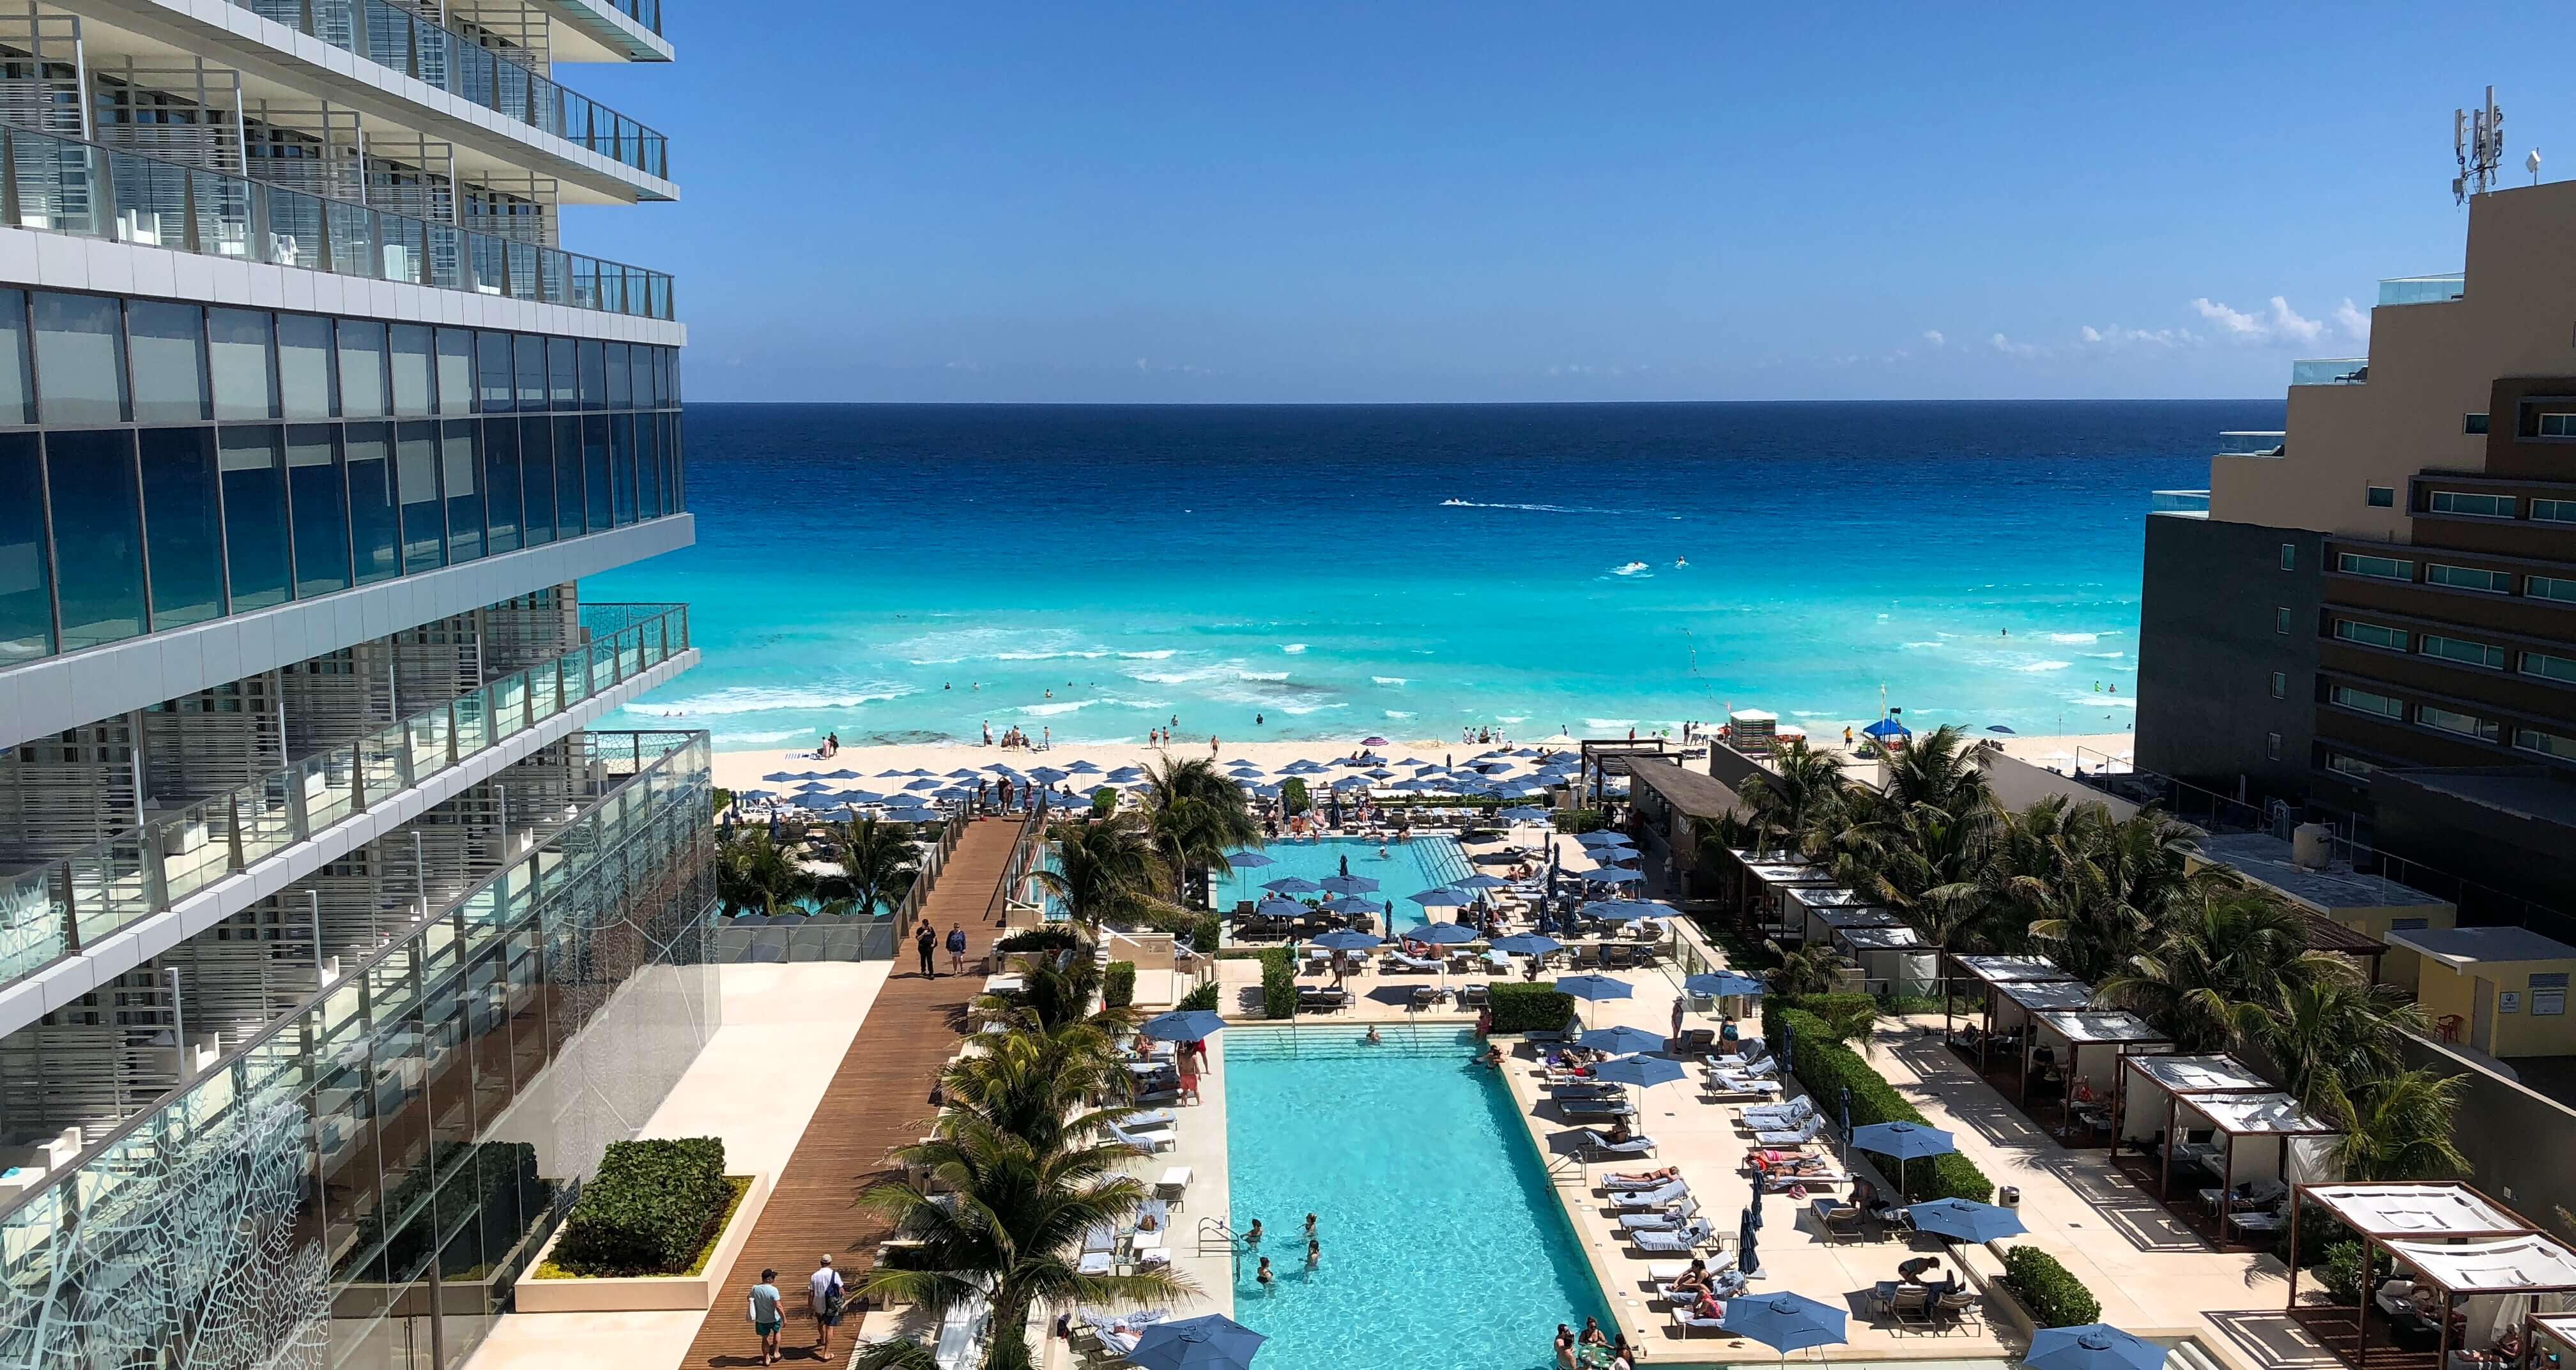 Secrets The Vine Cancun Resort Review The Candid Millennial